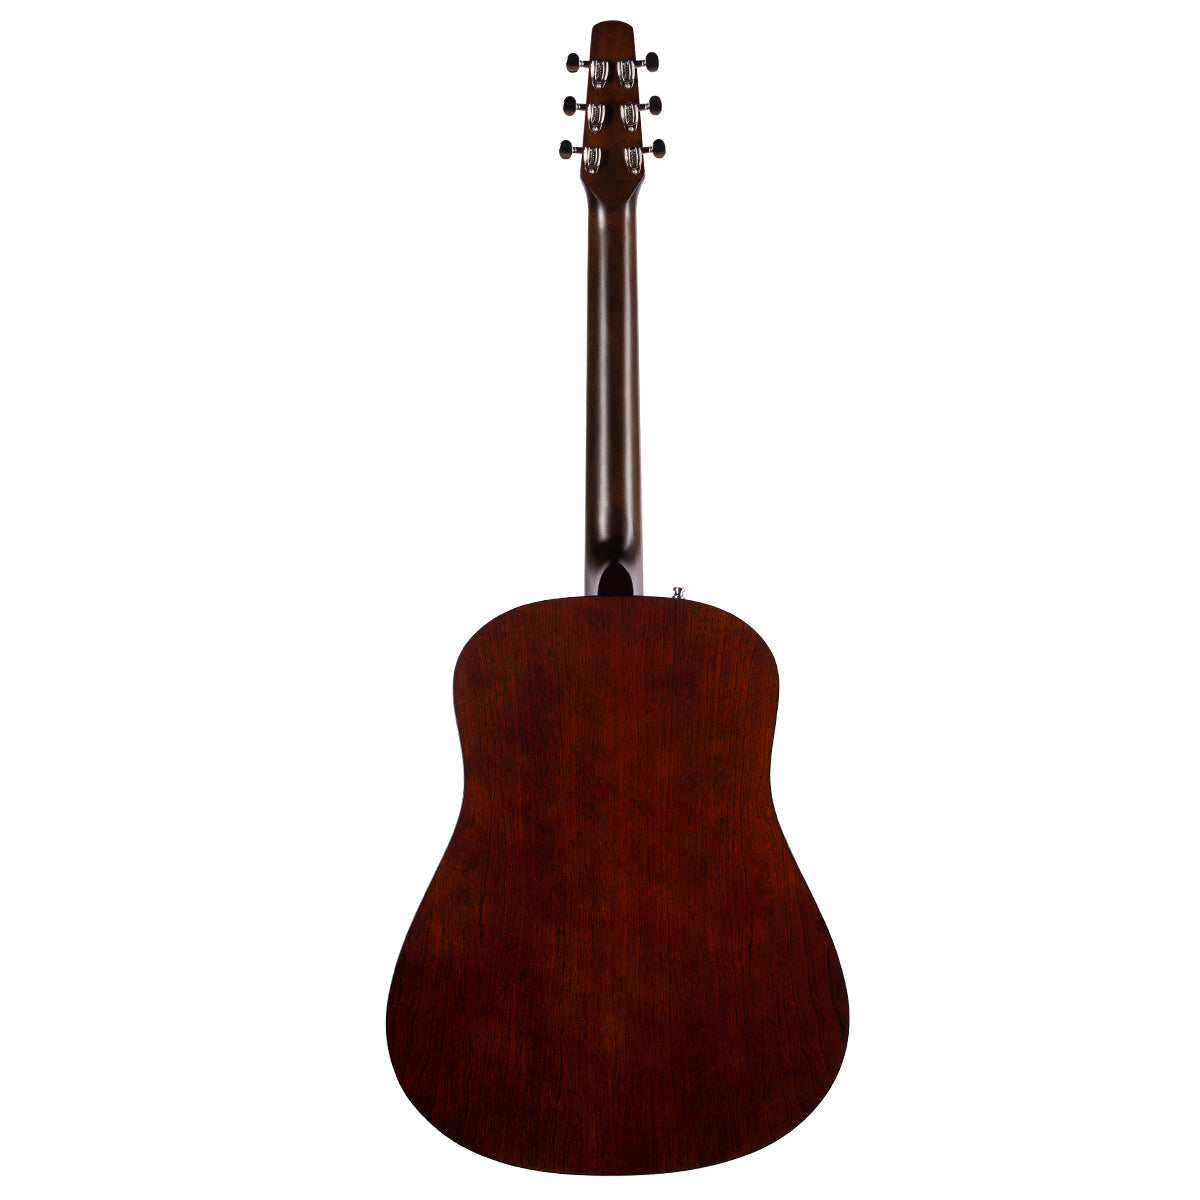 Seagull S6 Original Acoustic Guitar ~ Natural, Acoustic Guitar for sale at Richards Guitars.